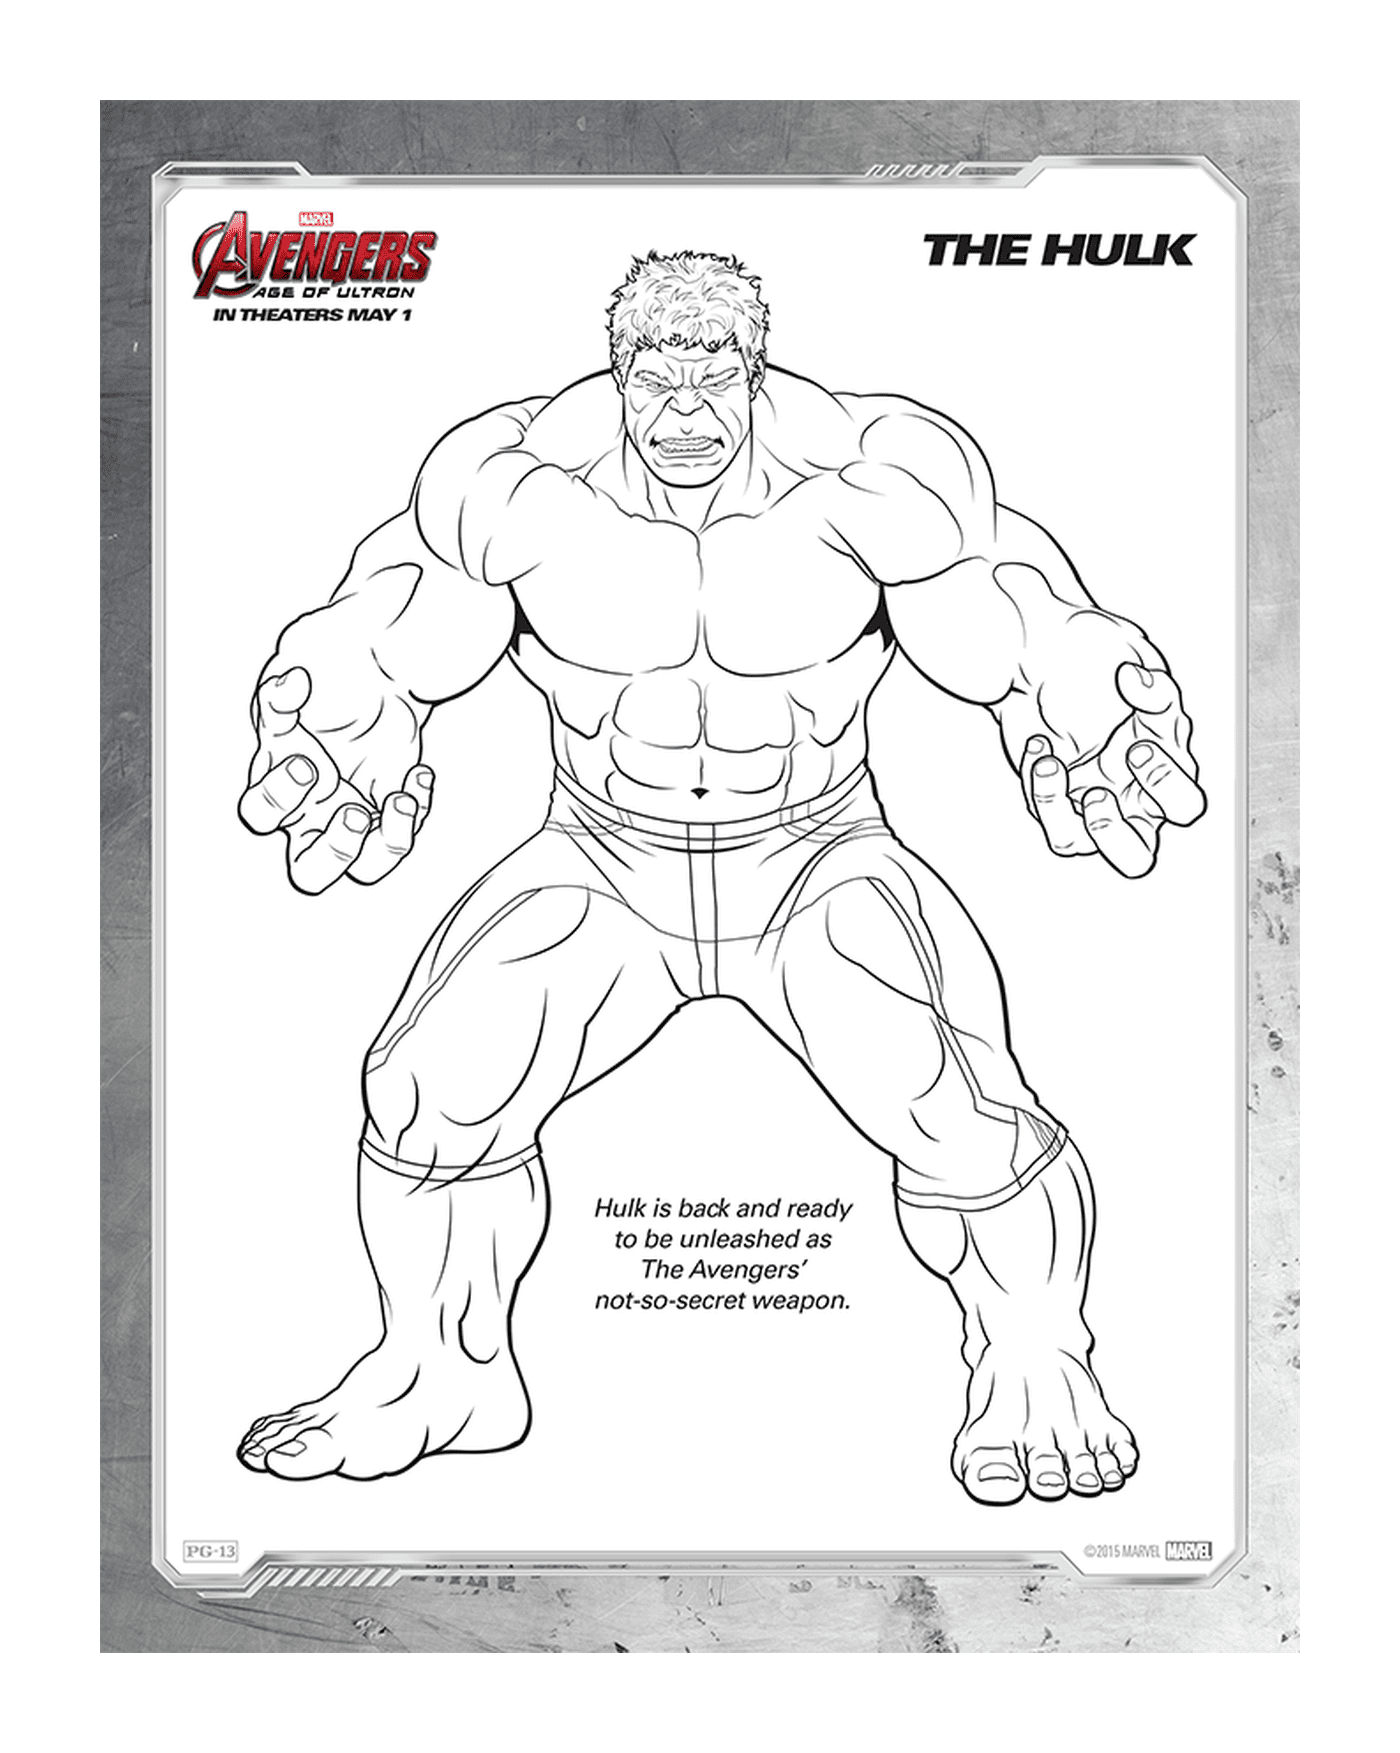  Image of an adult, Hulk 